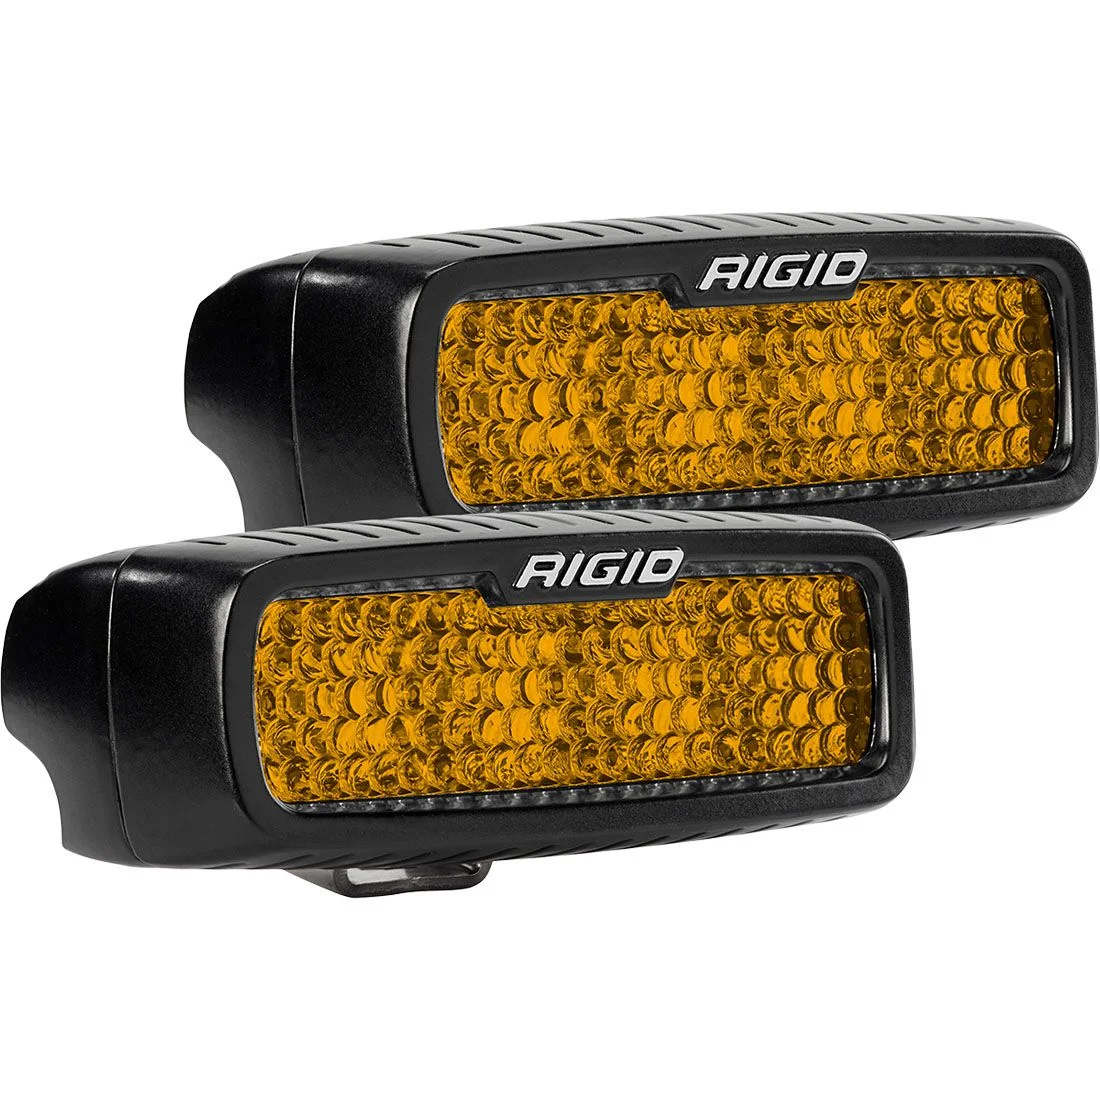 Rigid SR-Q Series REAR FACING Diffused Surface Mount Light Pairs